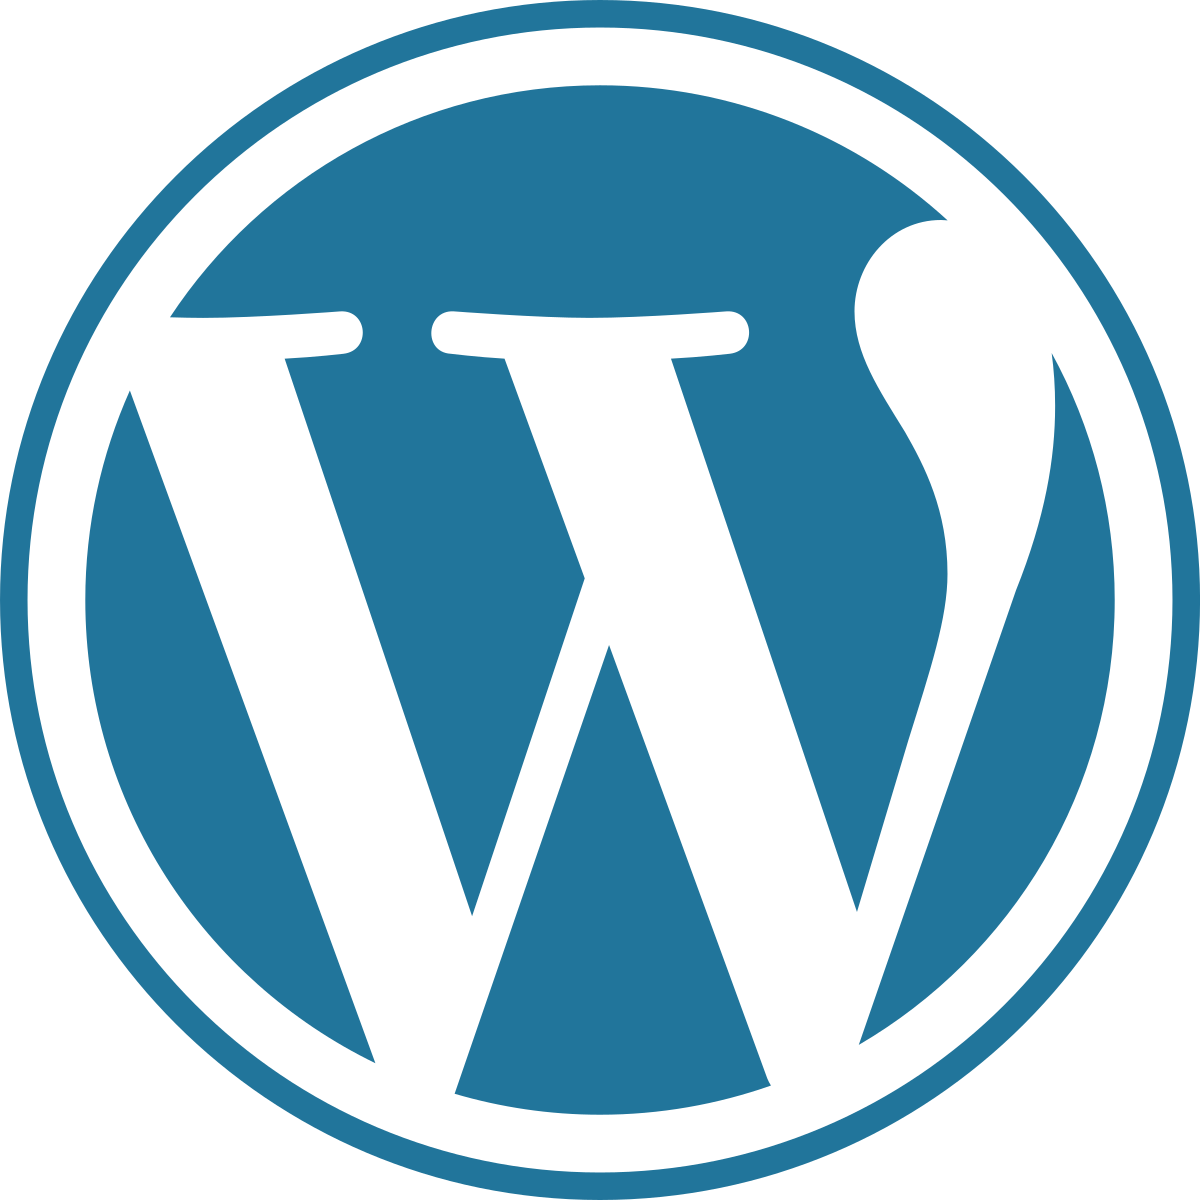 WordPress image